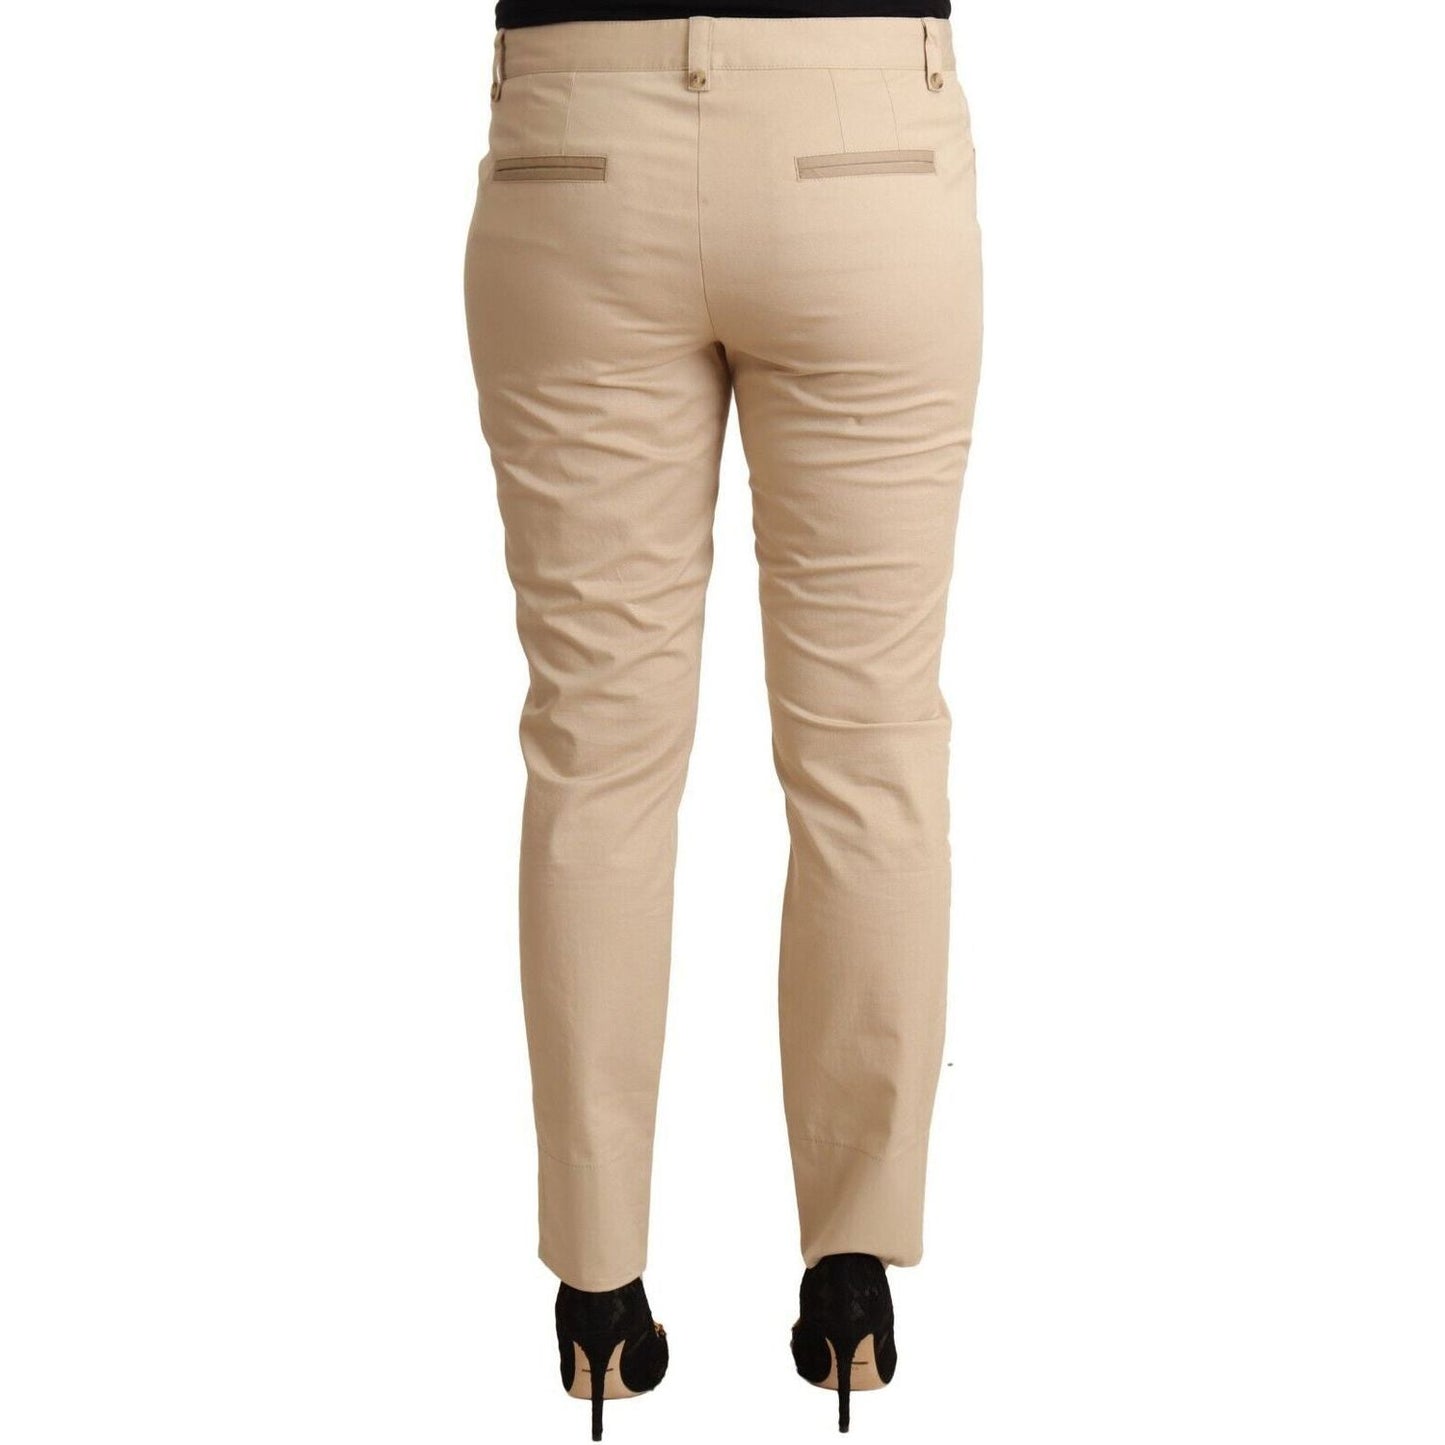 Dolce & Gabbana Elegant Beige Cotton Stretch Skinny Pants Jeans & Pants beige-cotton-stretch-skinny-trouser-pants